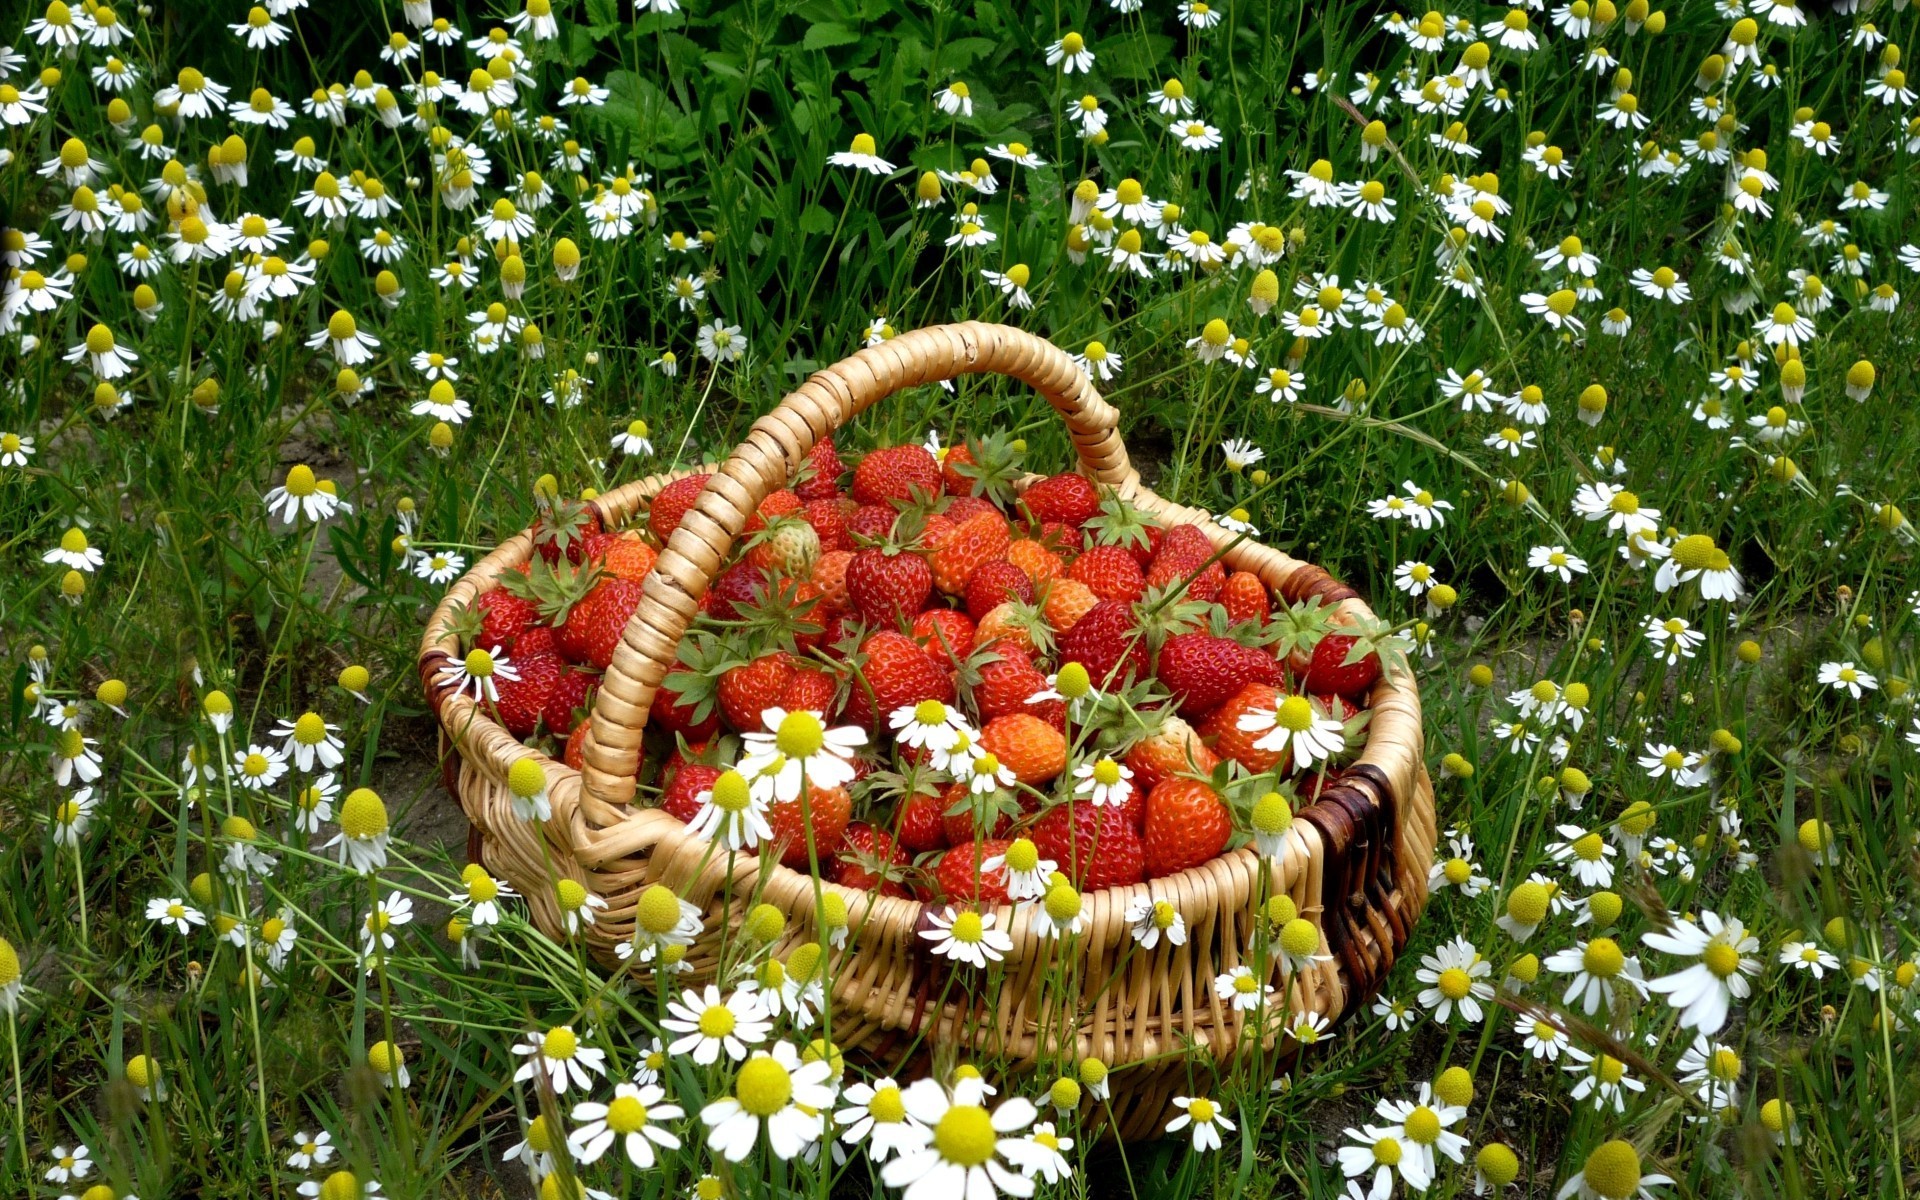 food, strawberry, basket, daisy, nature, still life, white flower, fruits